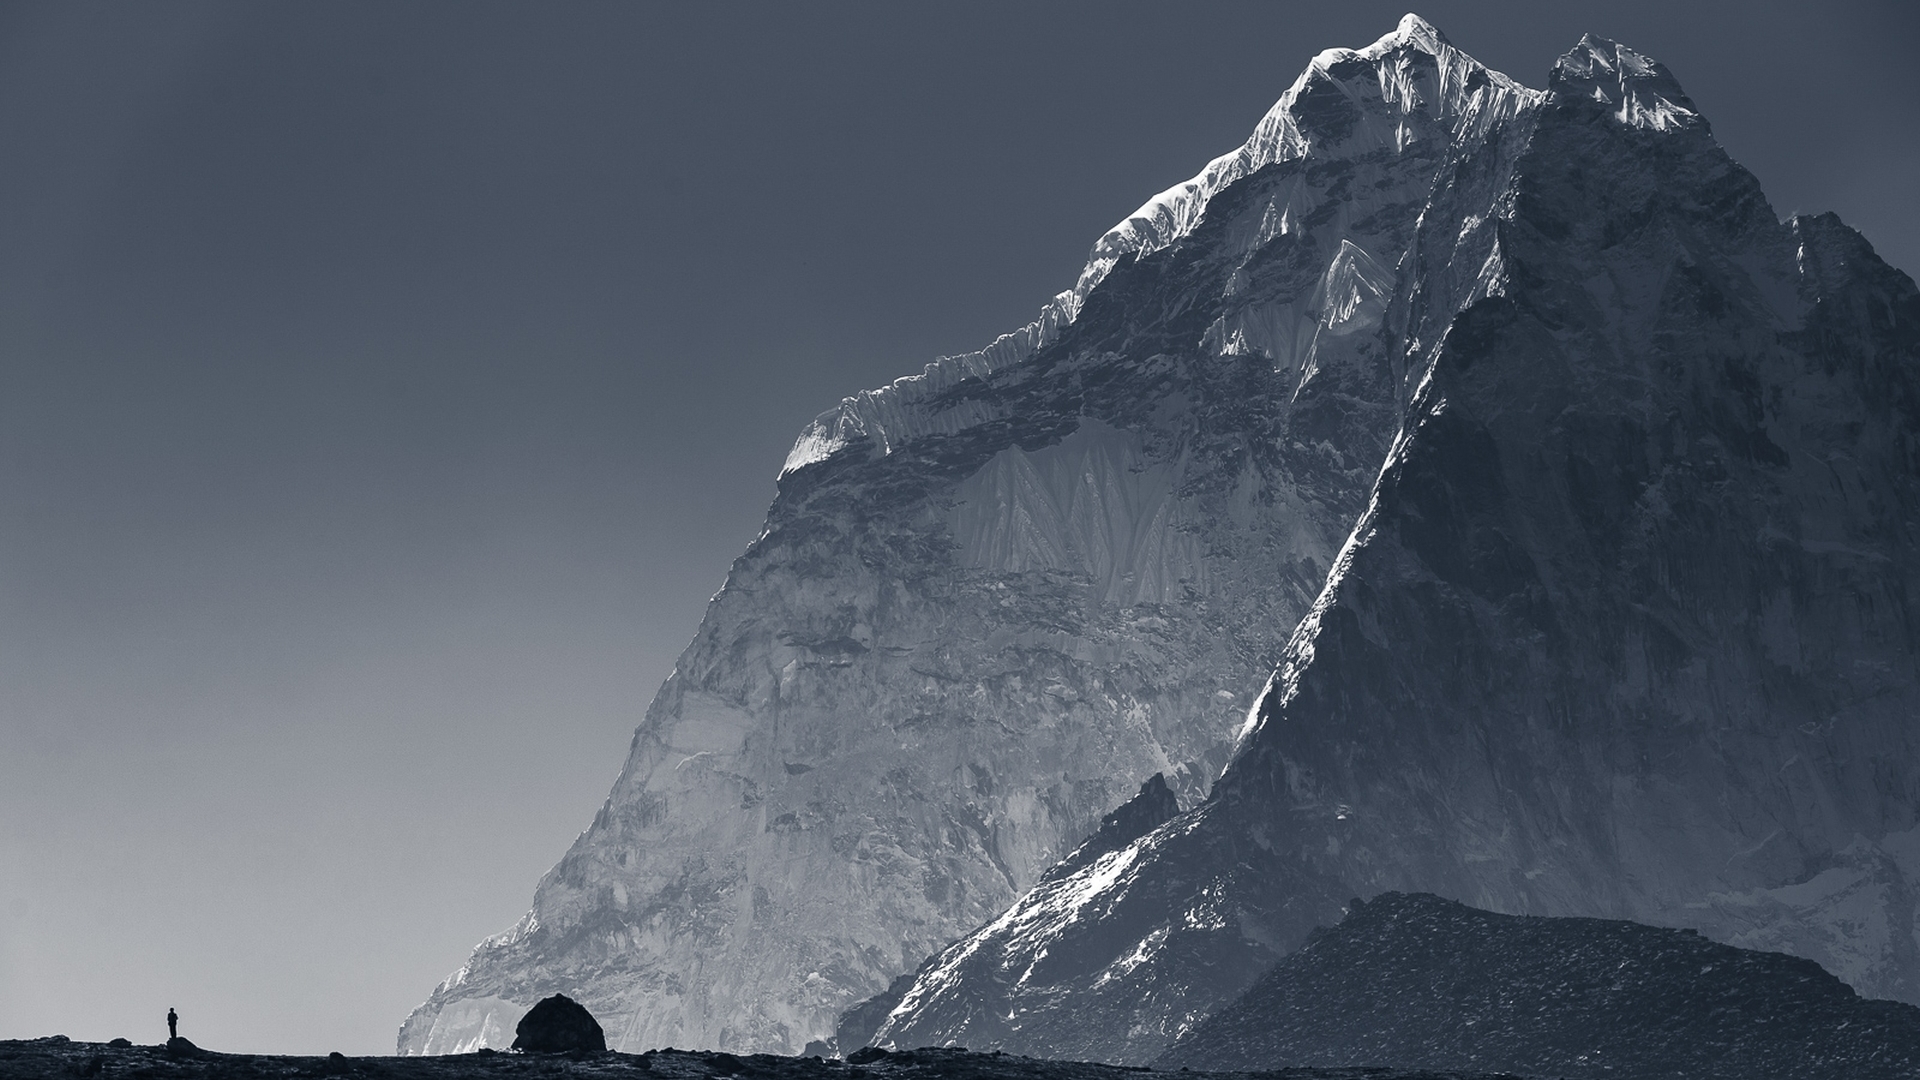 458520 descargar imagen tierra/naturaleza, montaña, nepal, montañas: fondos de pantalla y protectores de pantalla gratis